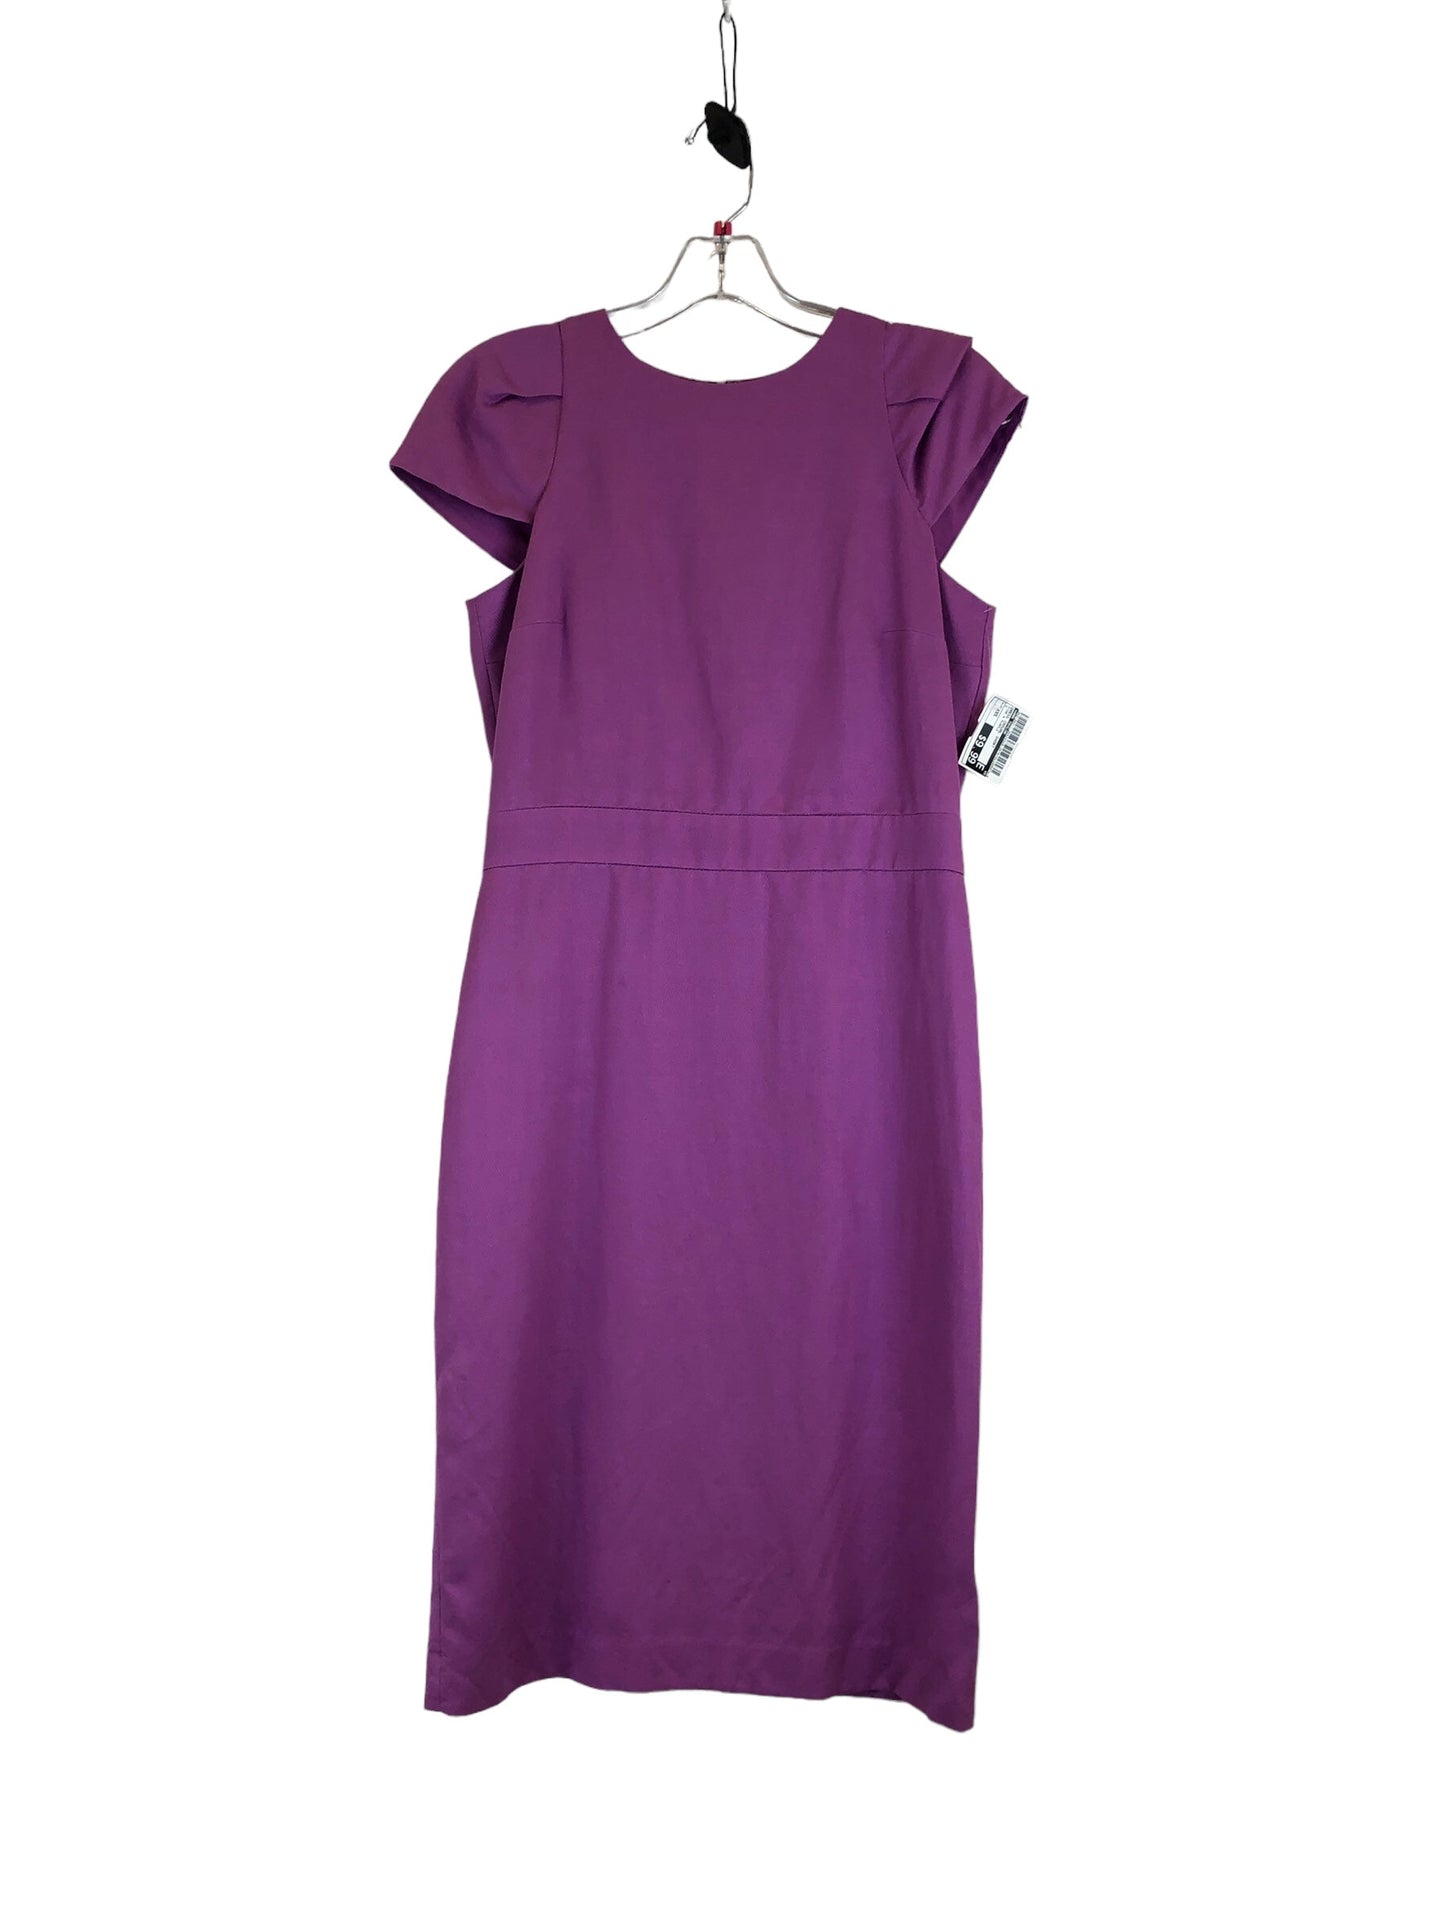 Pink & Purple Dress Casual Short Ann Taylor, Size Xxs